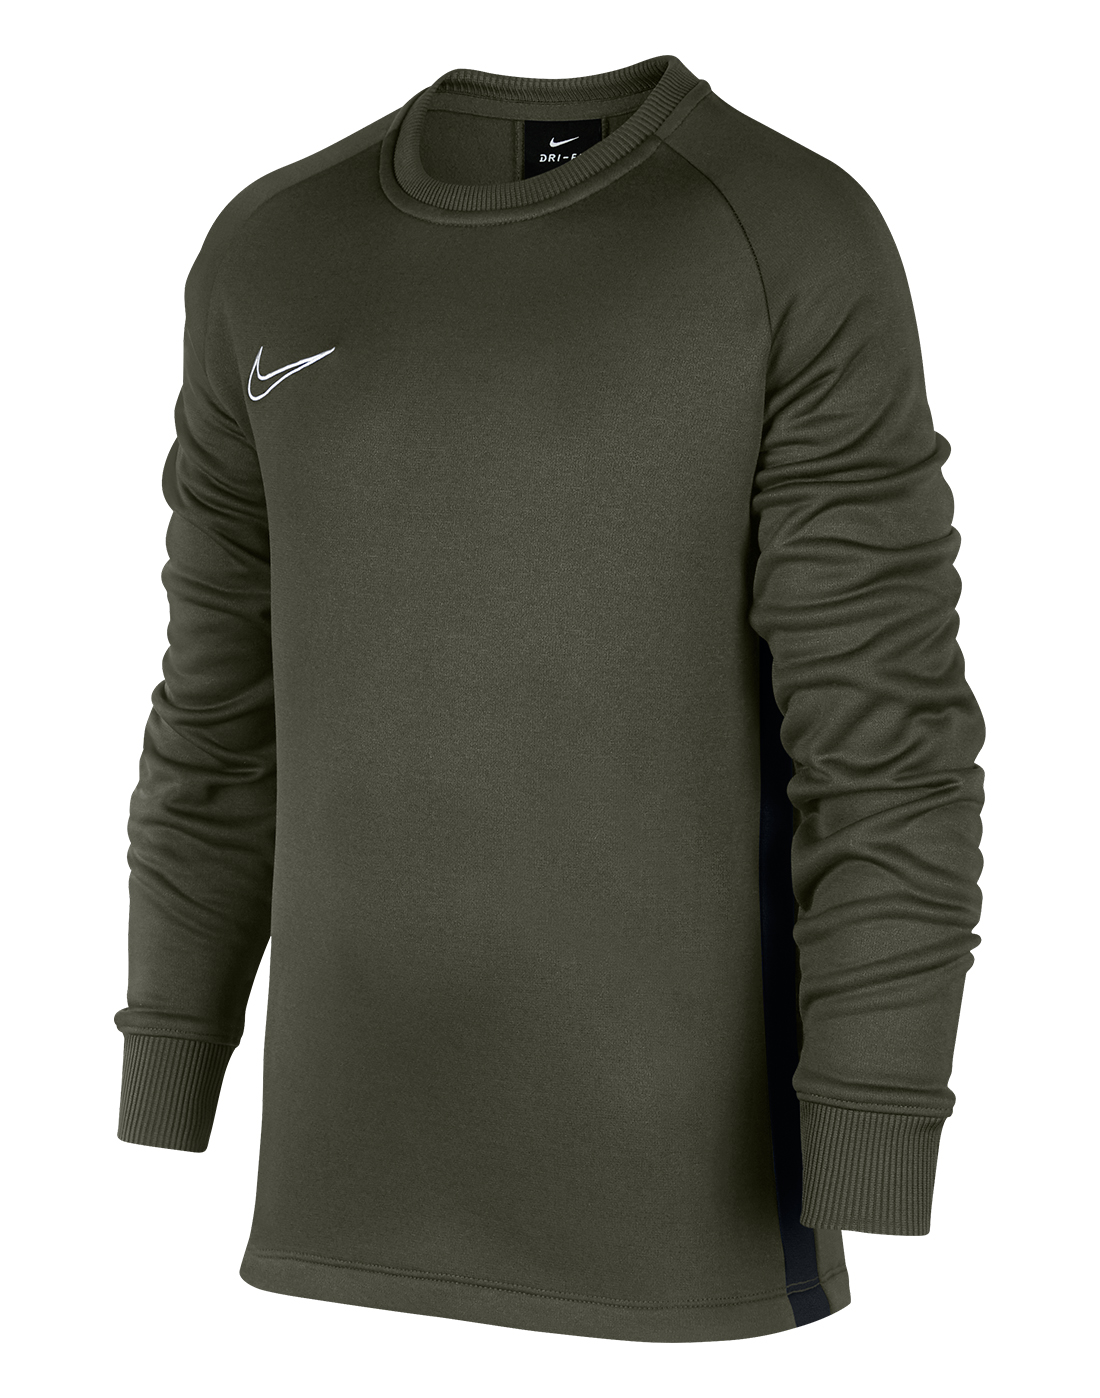 Boy's Green Nike Therma Sweatshirt | Life Style Sports